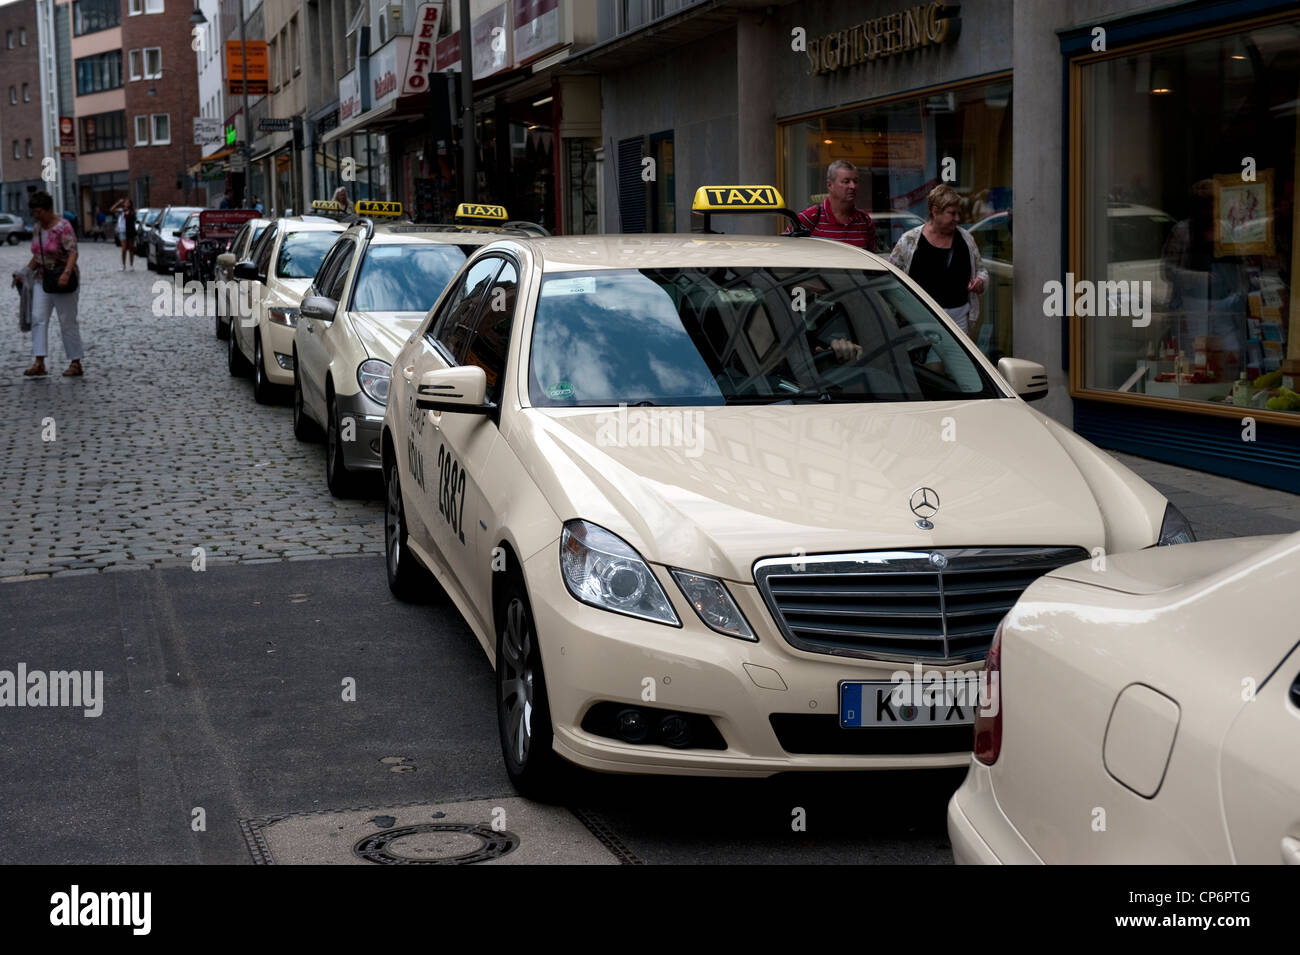 Mercedes Taxi Cab Car Rank Queue Cologne Germany Europe EU Stock Photo